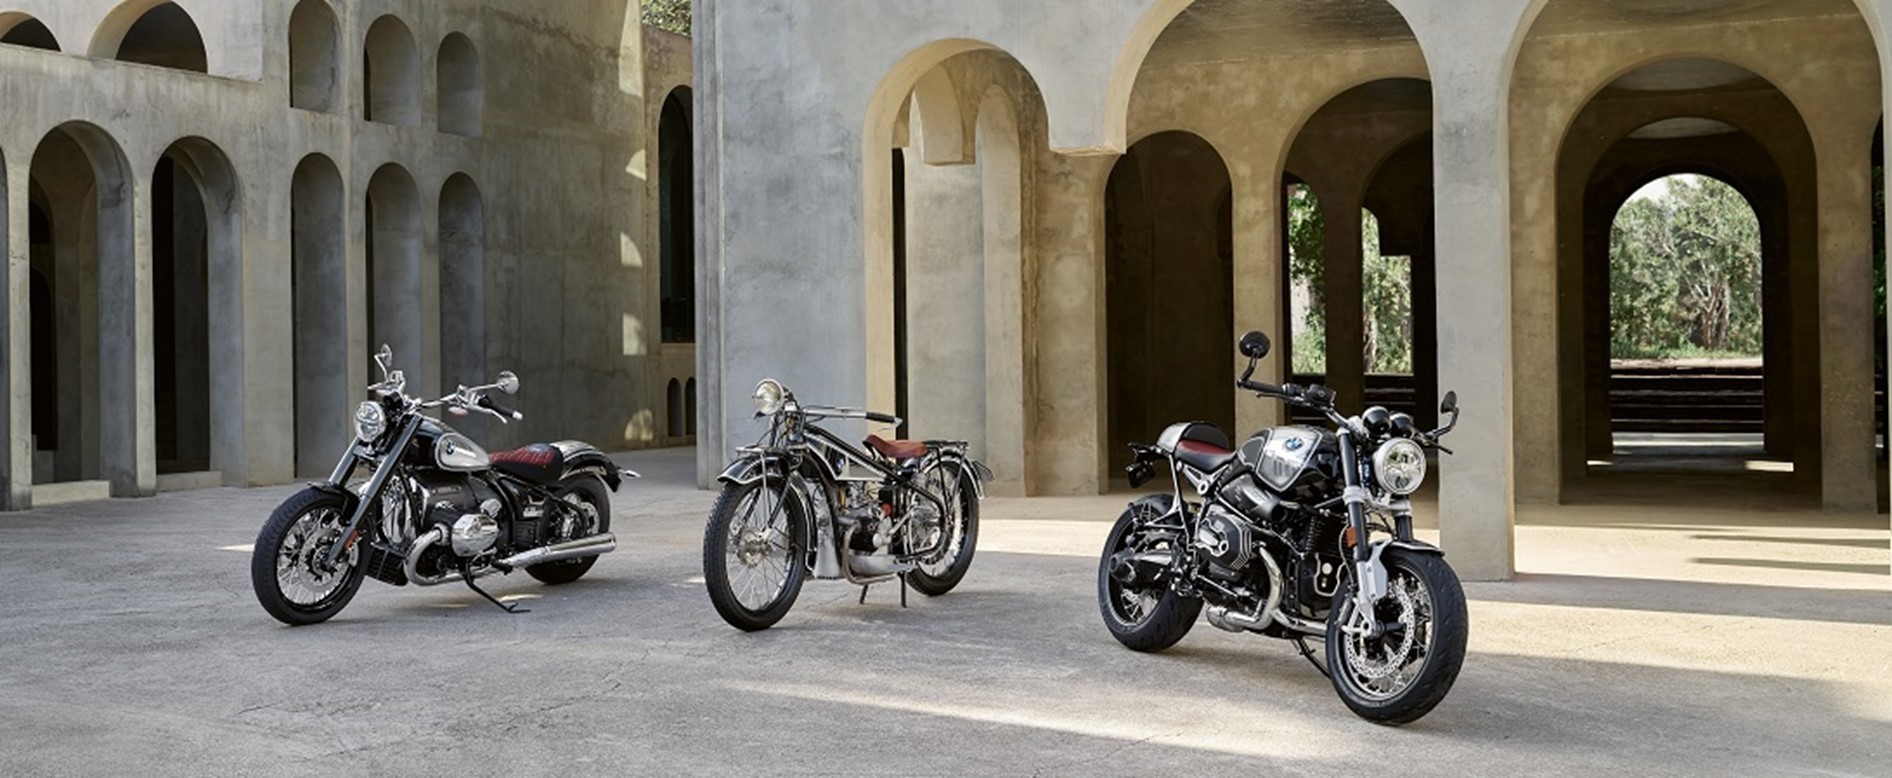 BMW Motorrad Starts 100-Year Celebration With Two New Models - BimmerLife